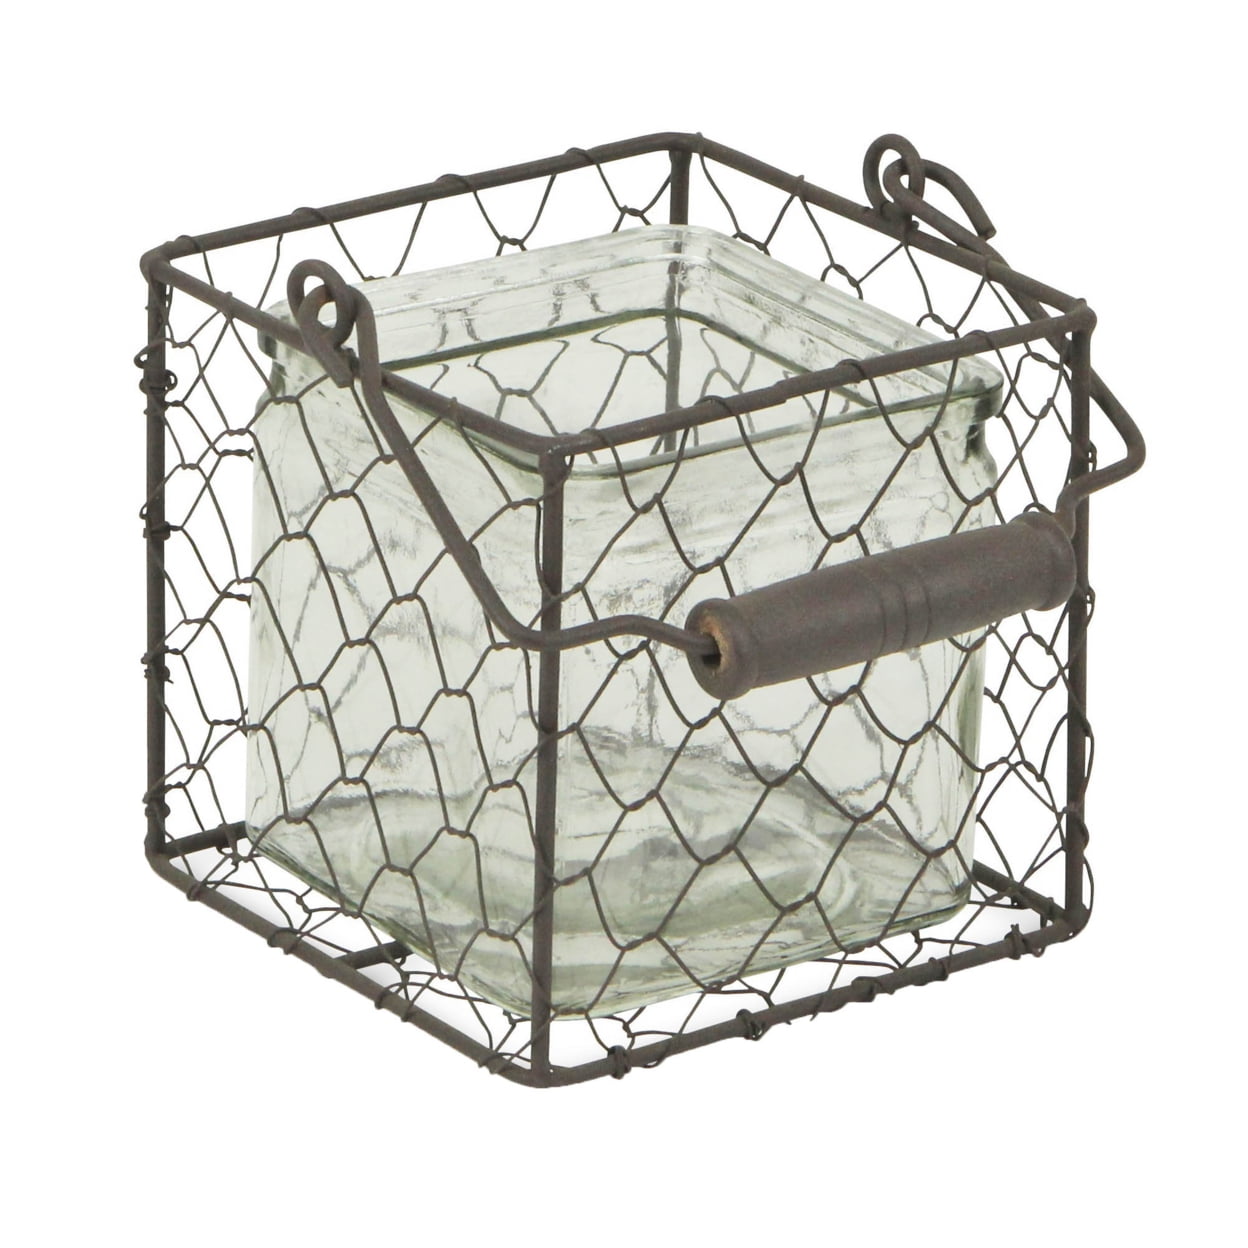 15s002brm Square Glass Jar In Wire Basket, Brown - Medium